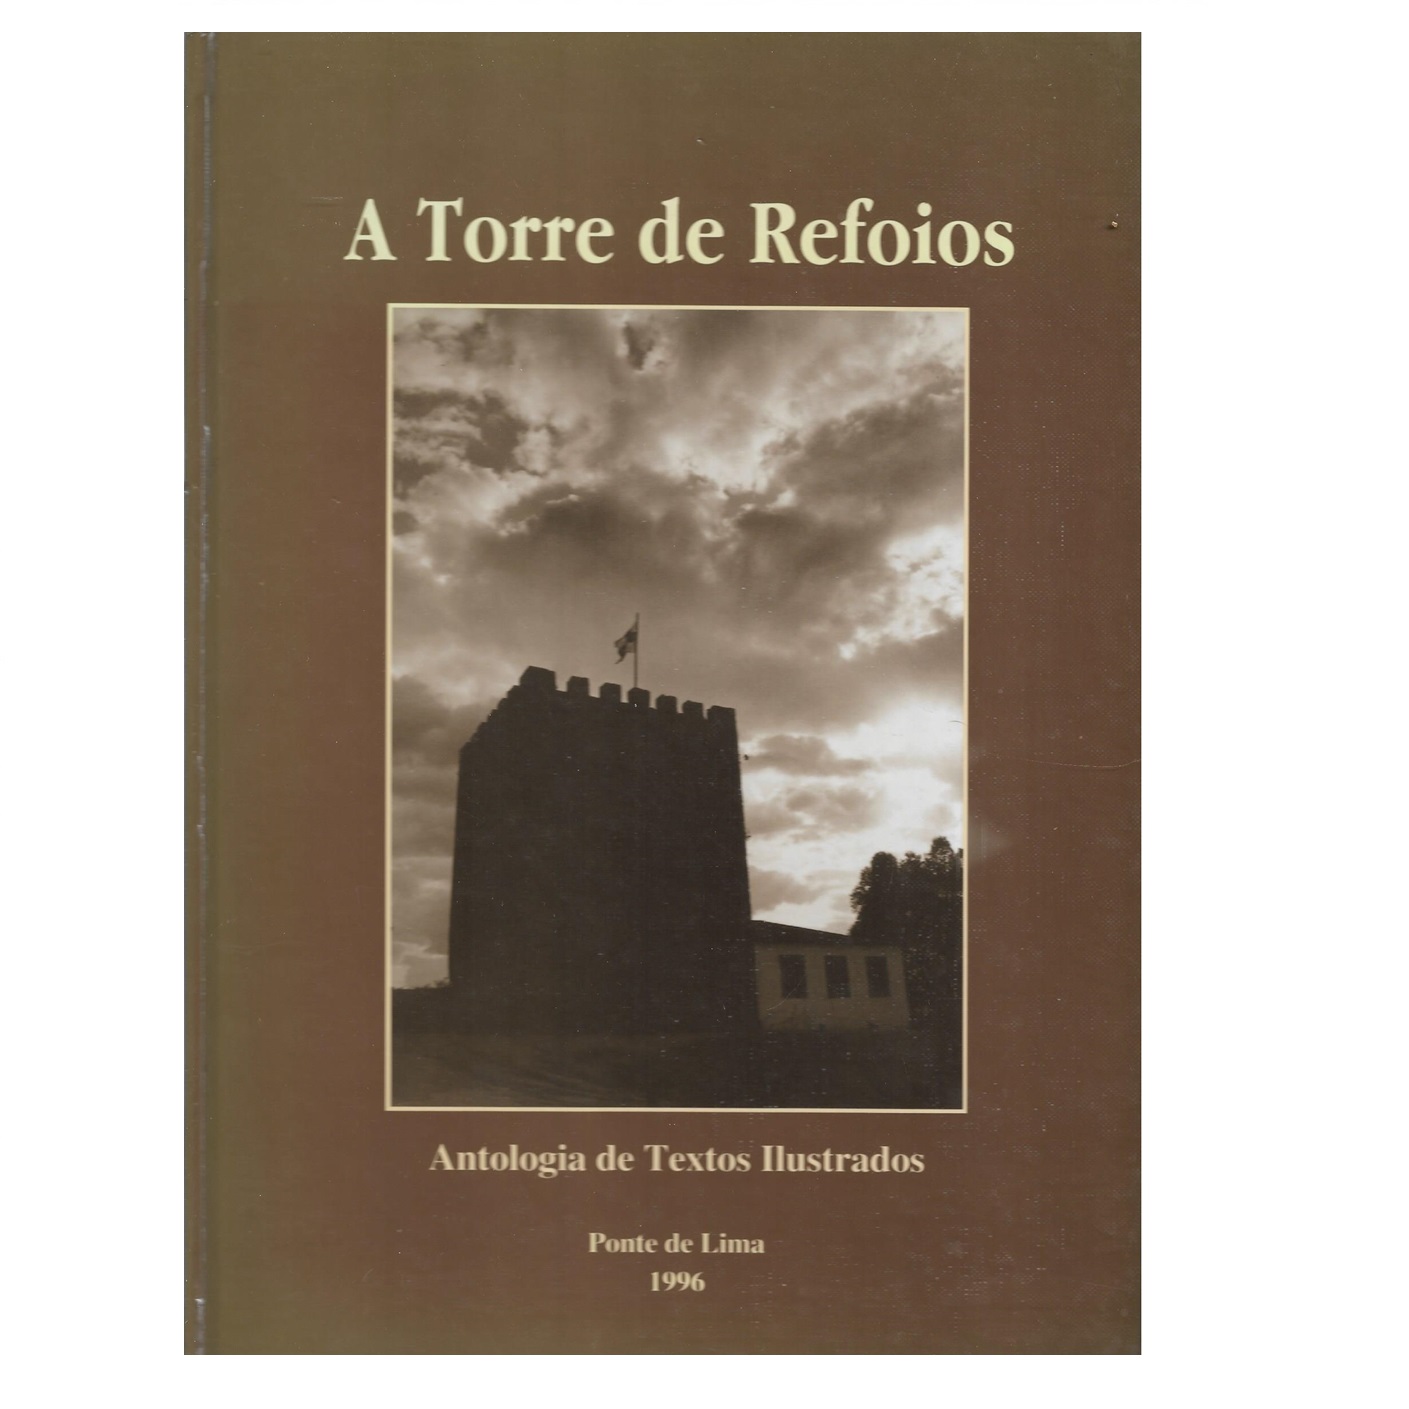  A Torre de Refoios: Antologia de textos ilustrados. 